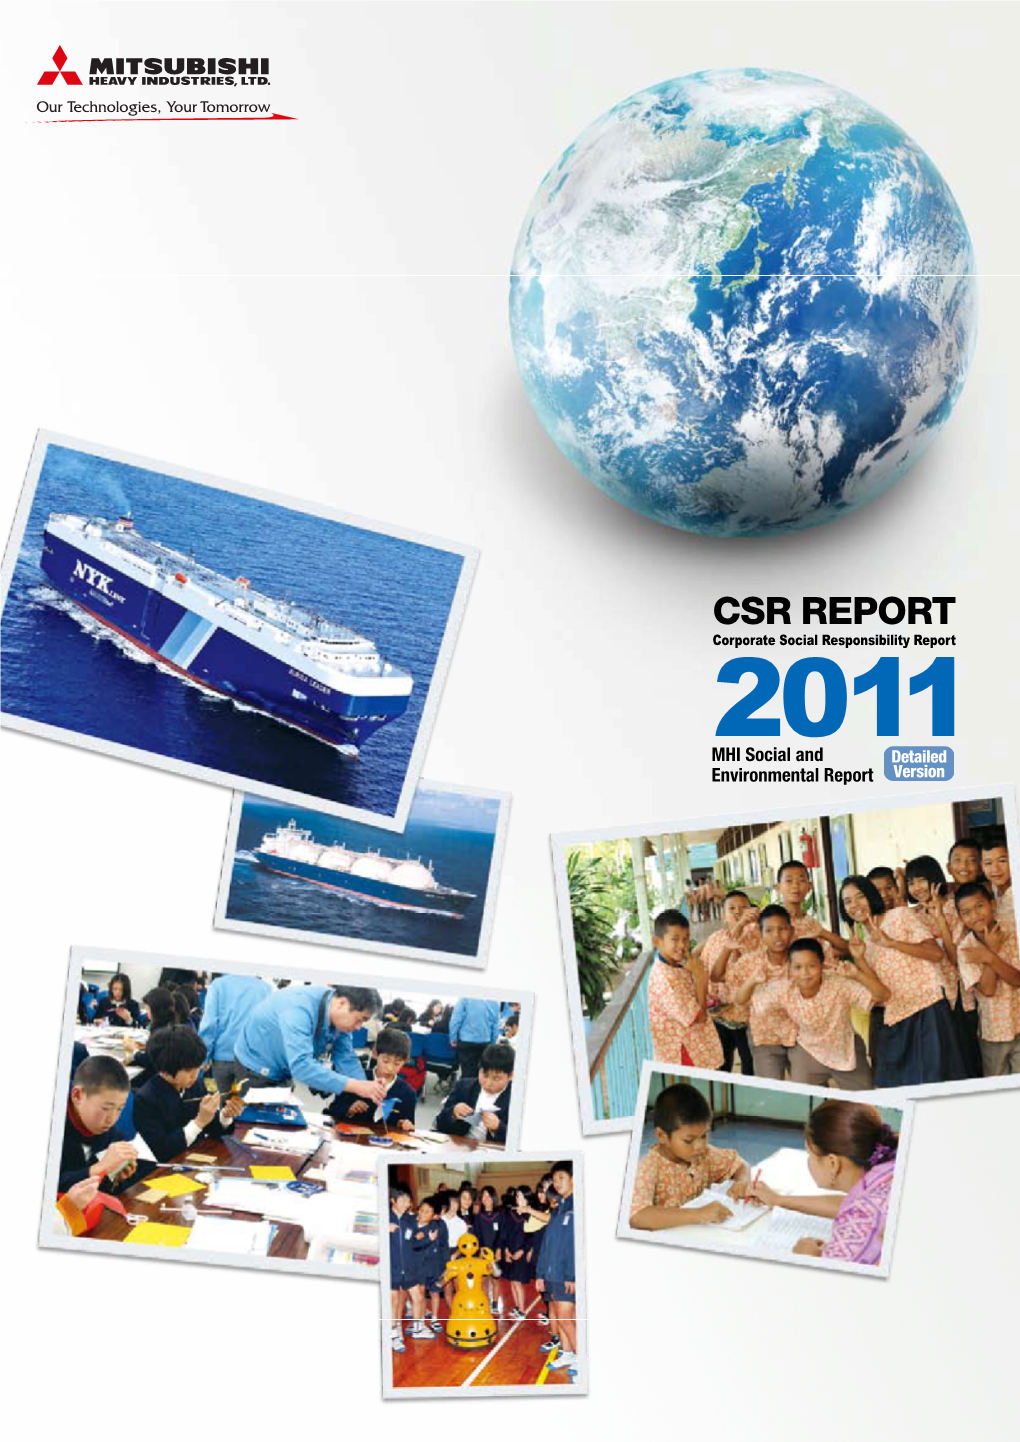 CSR Report 2011 Detailed Version